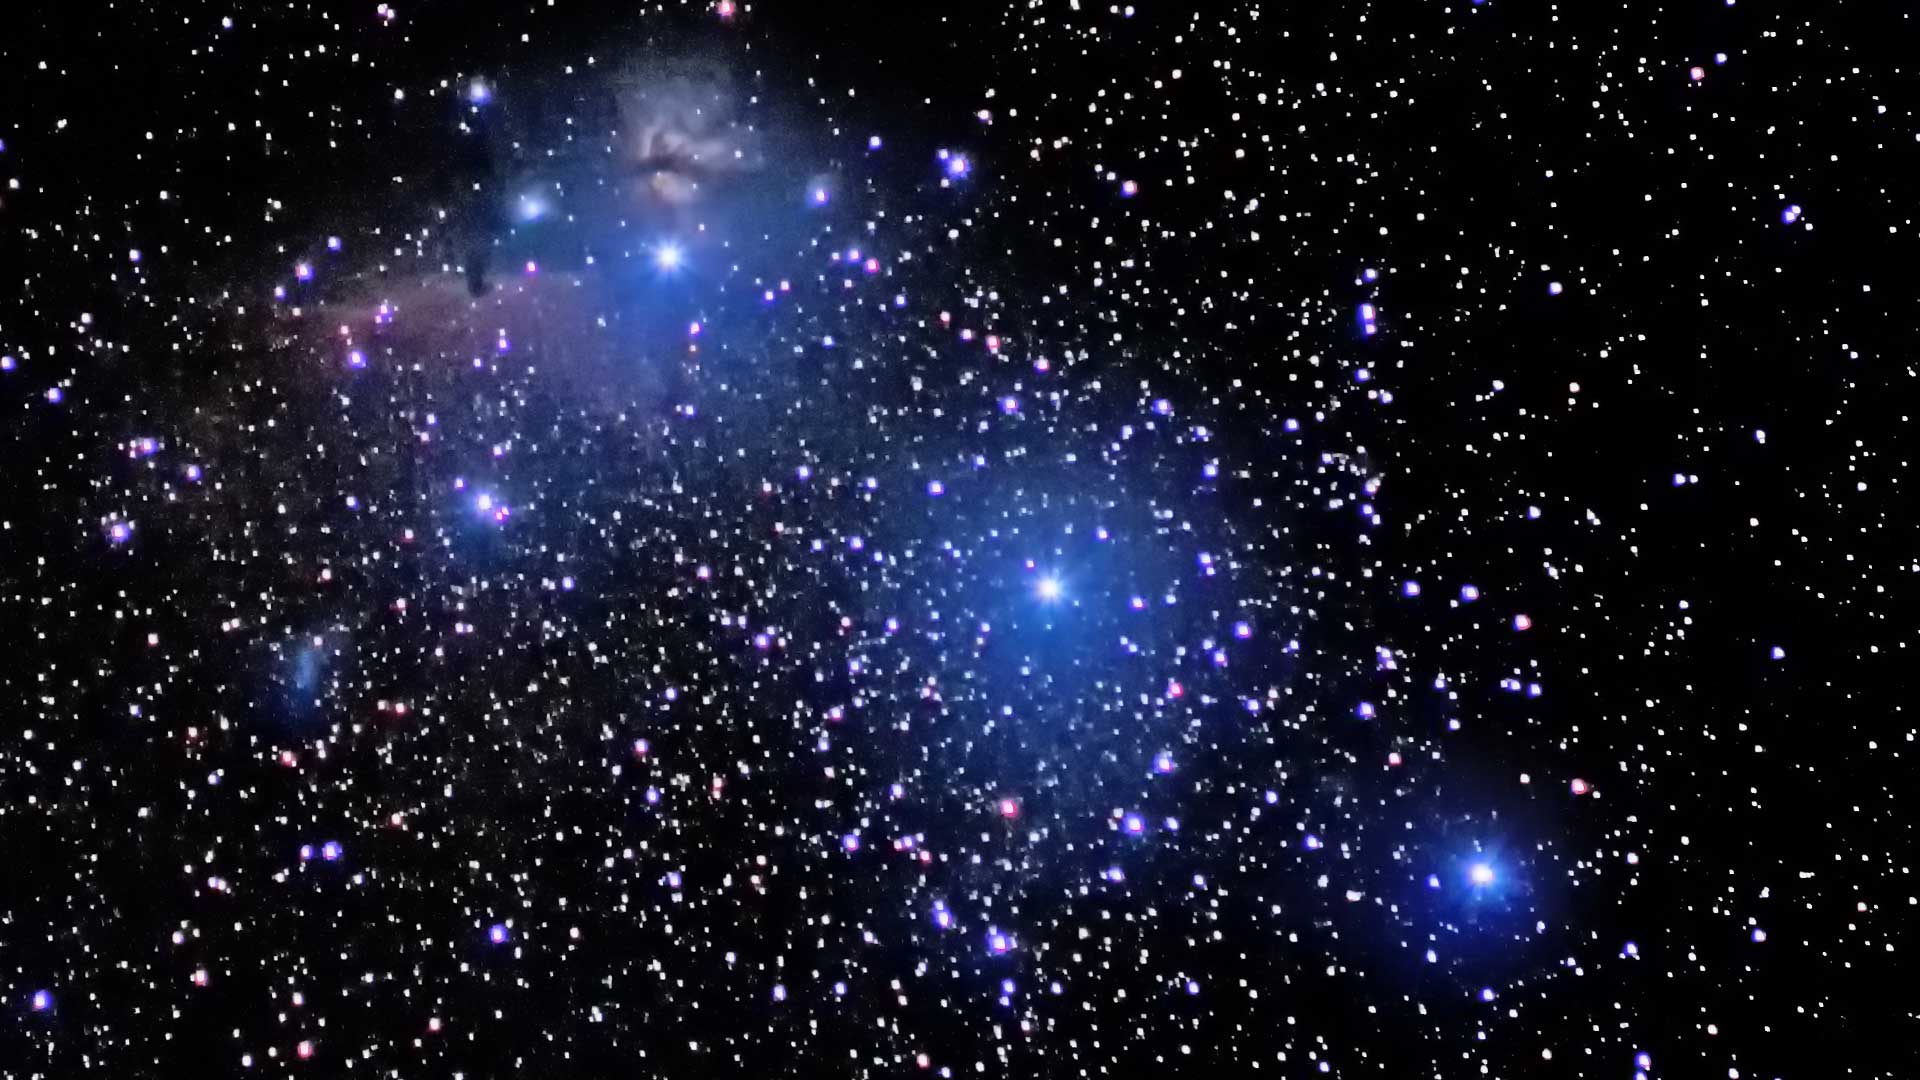 Photograph of Orion's belt stars